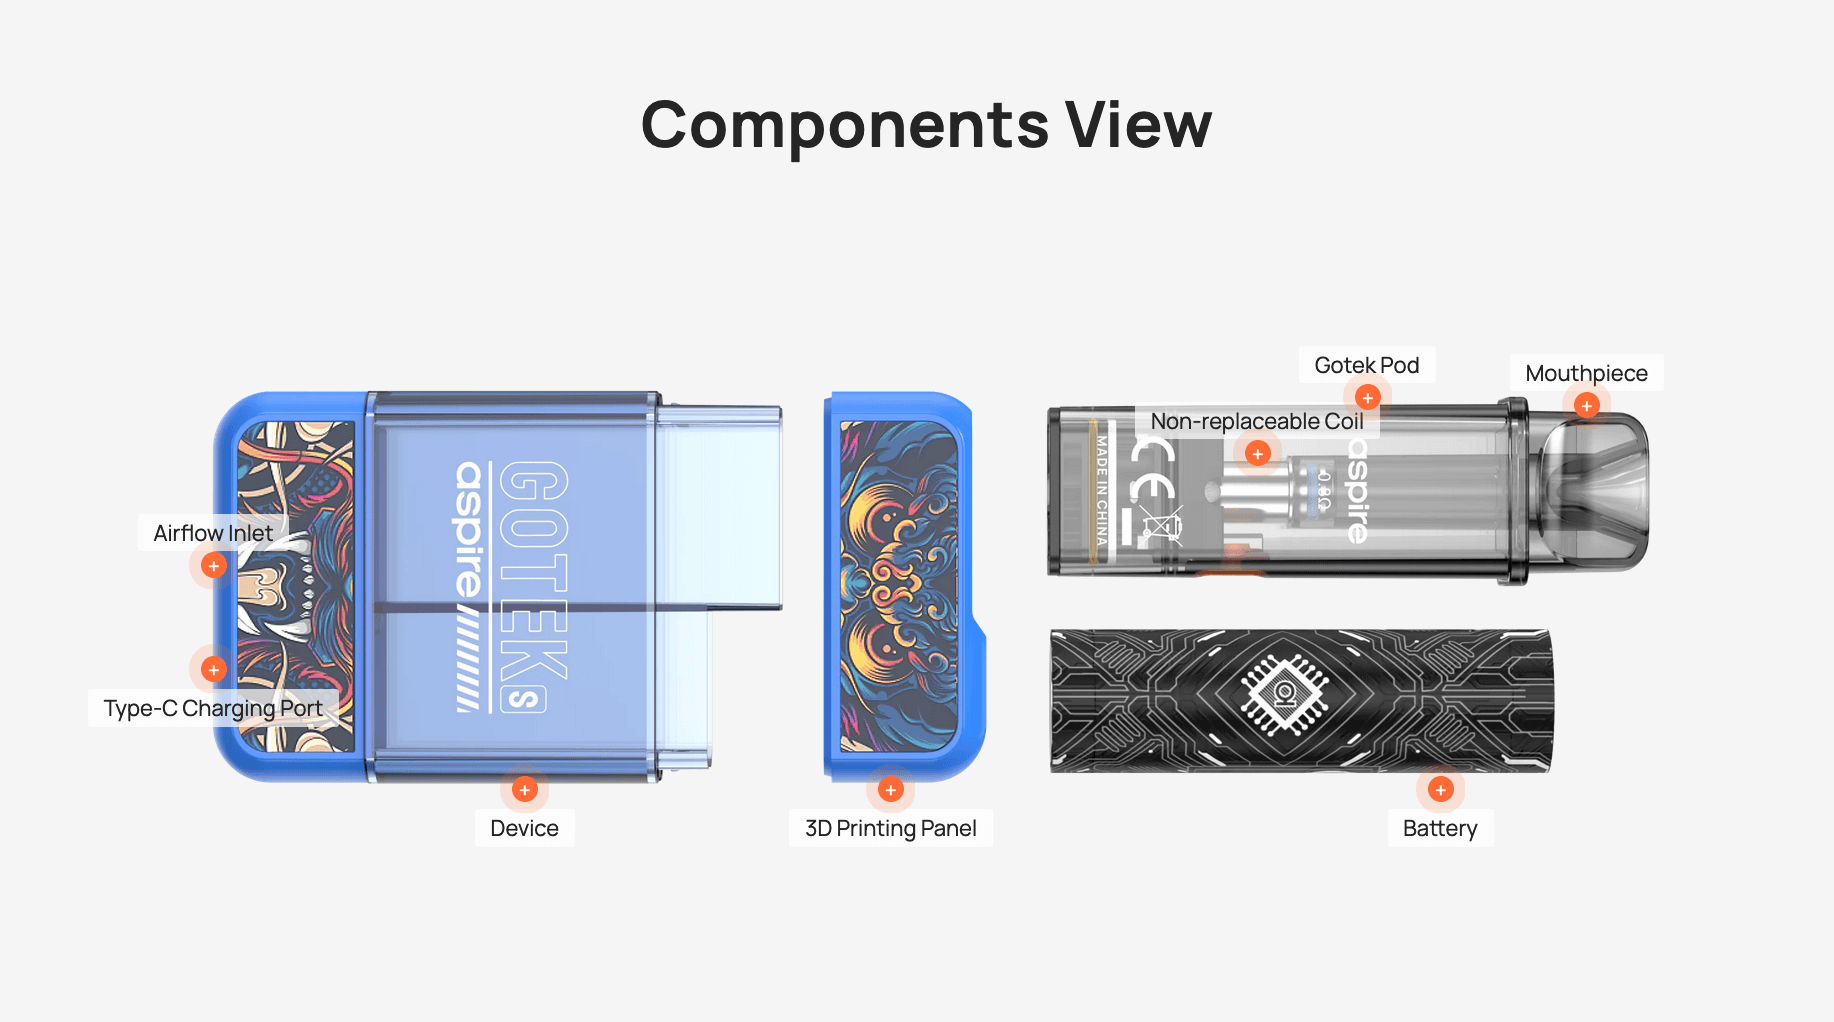 Aspire Gotek S Components View